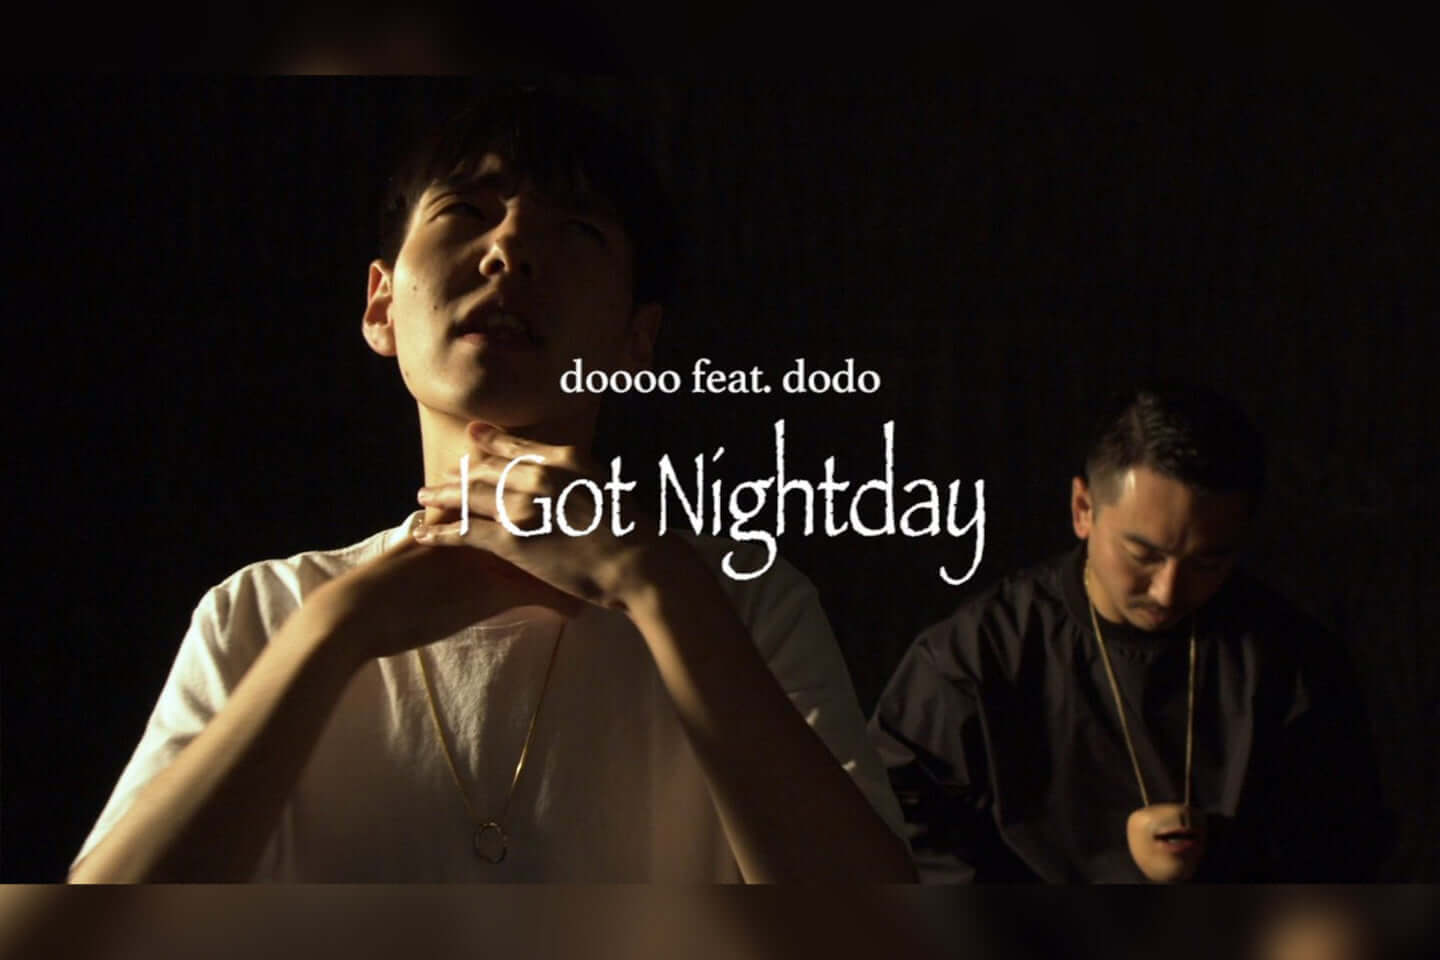 doooo feat. dodo - I Got Nightday